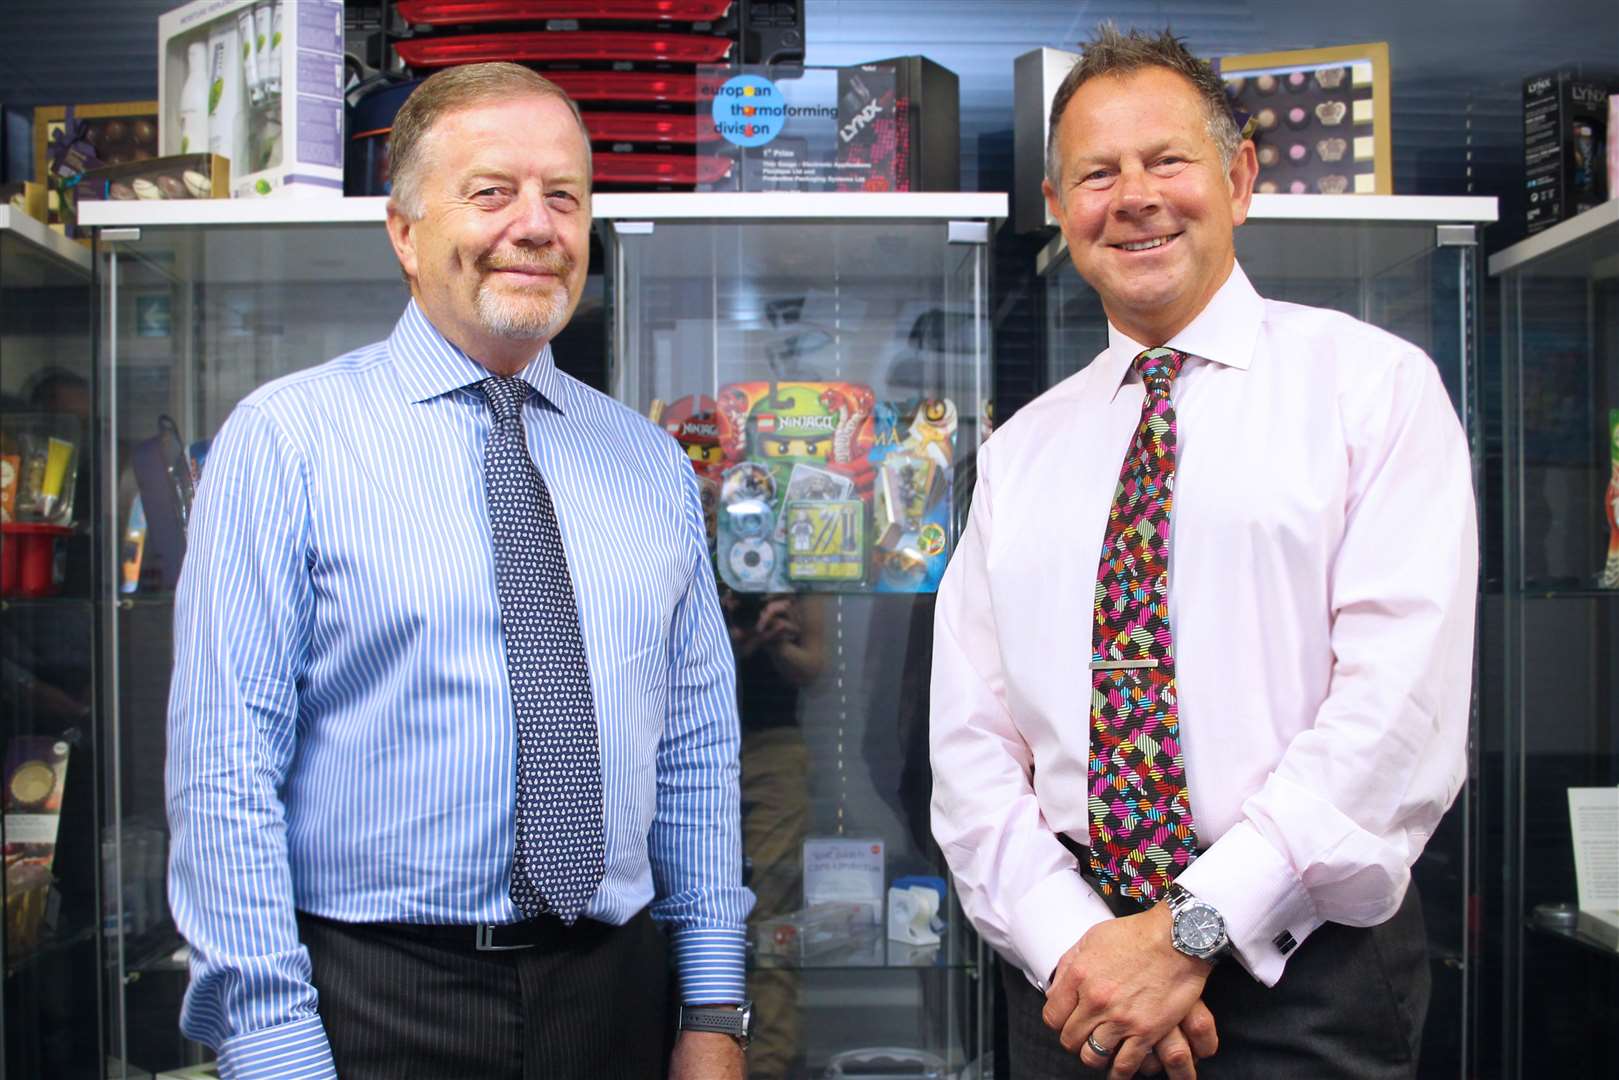 Plastique managing director John Lowe, left, and sales director Perry Rigler